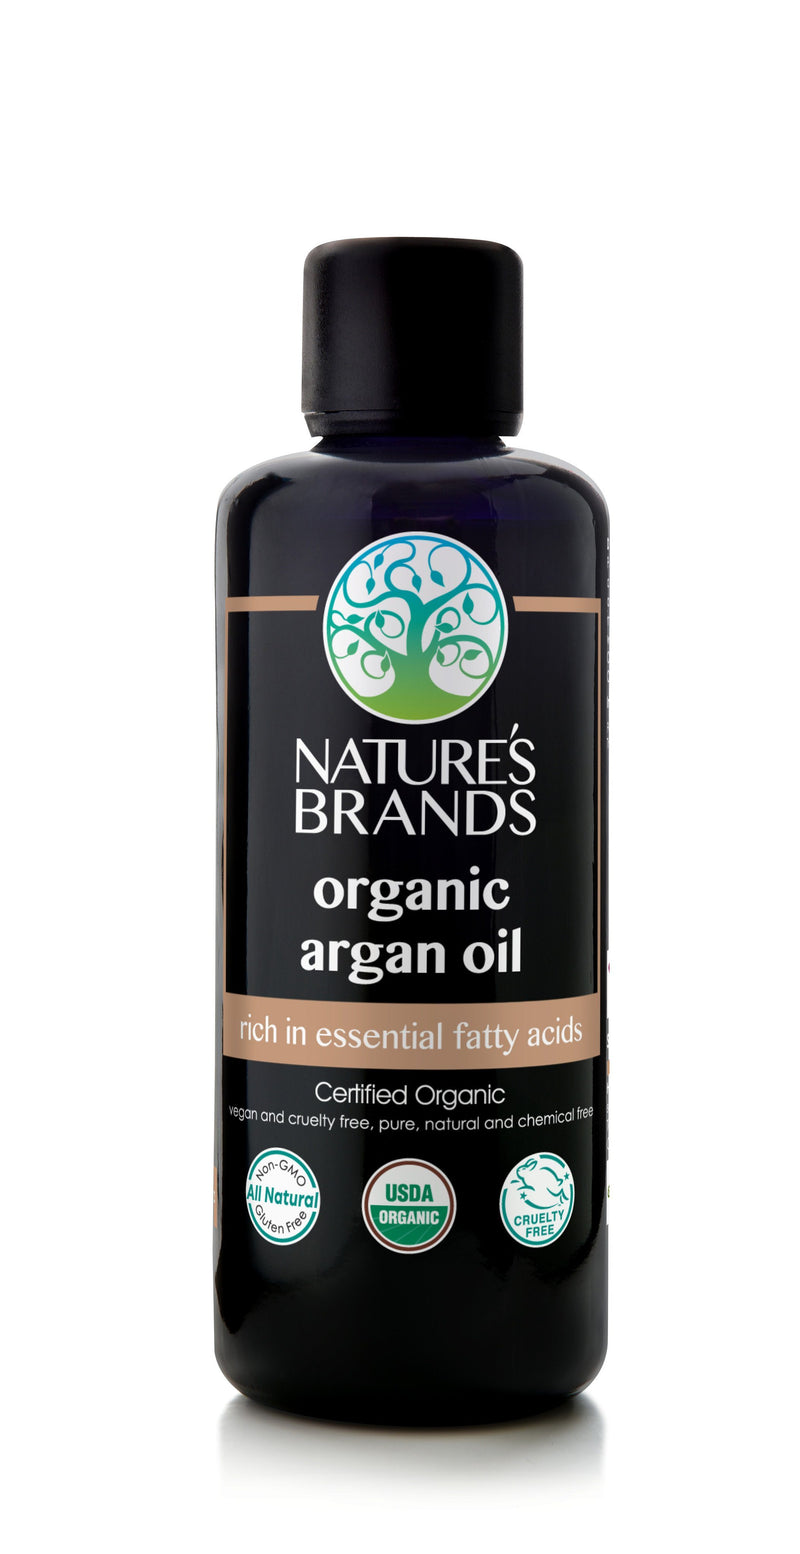 Herbal Choice Mari Organic Argan Oil; 3.4floz Glass - Herbal Choice Mari Organic Argan Oil; 3.4floz Glass - Herbal Choice Mari Organic Argan Oil; 3.4floz Glass